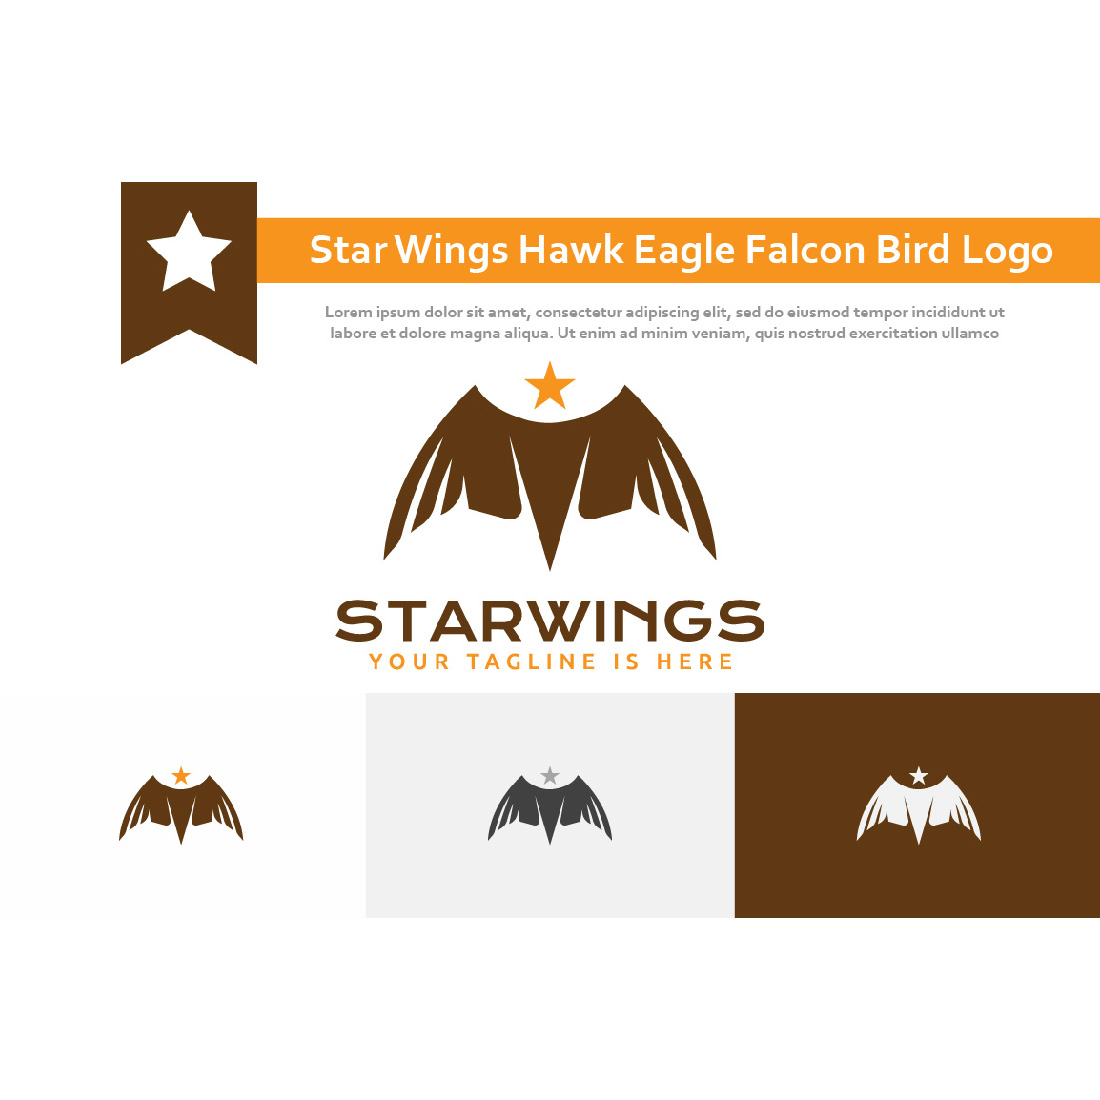 Star Wings Hawk Eagle Falcon Predator Bird Logo Template Example.